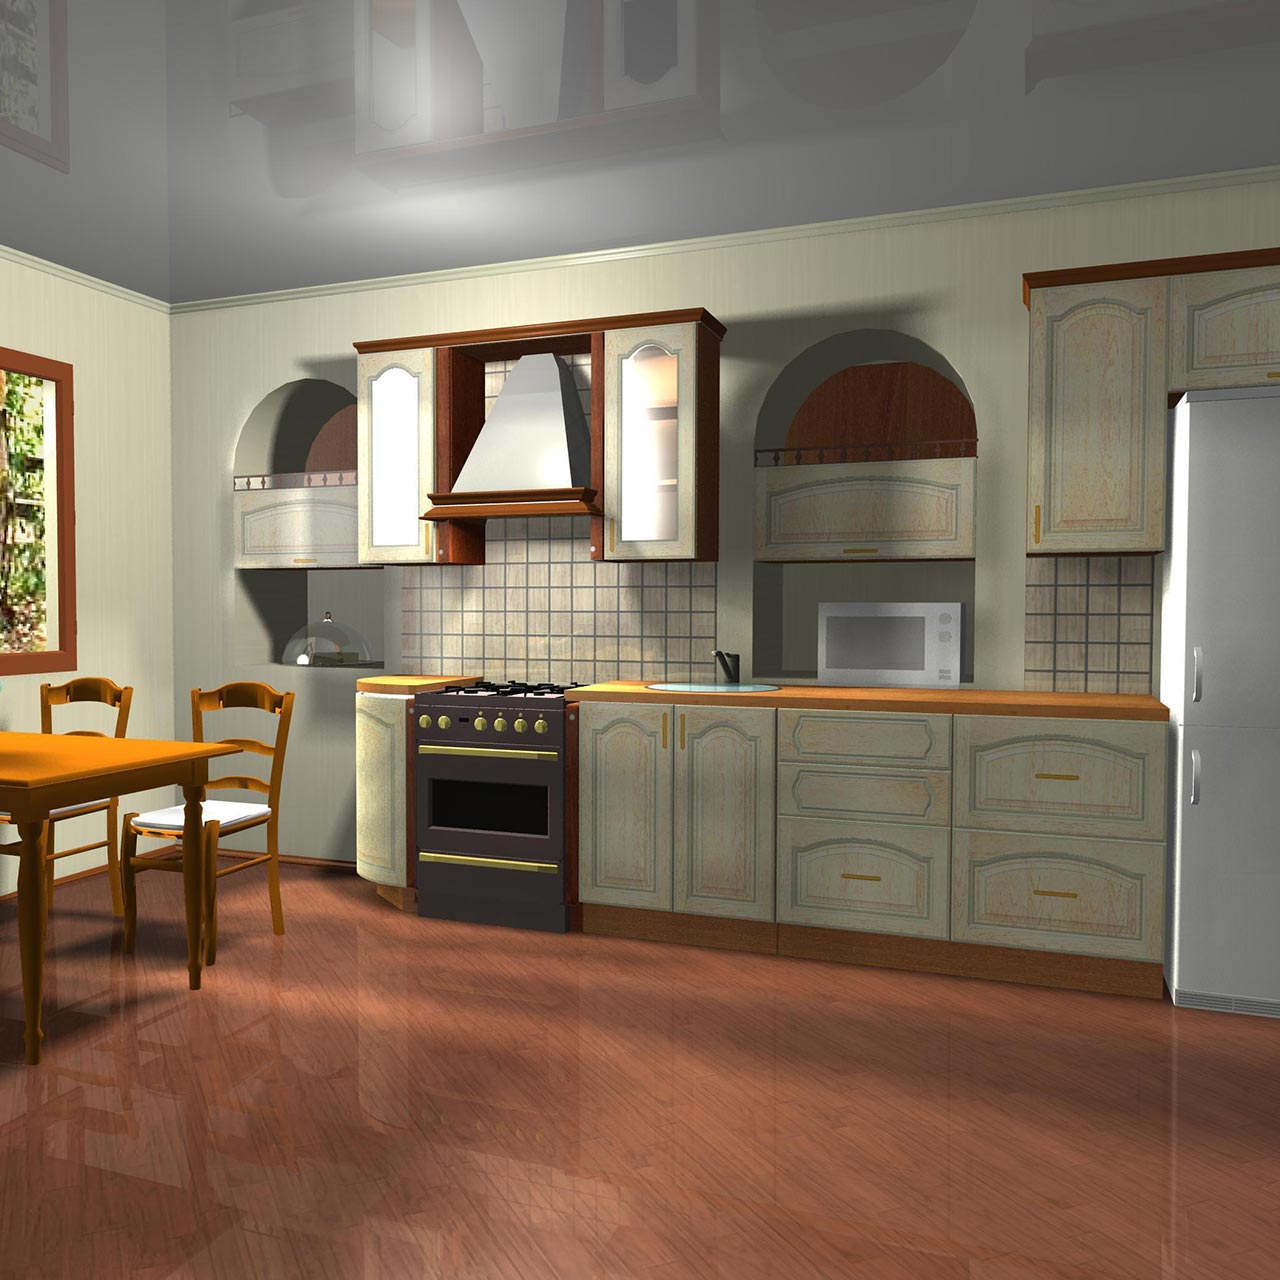 Italian modular kitchen design